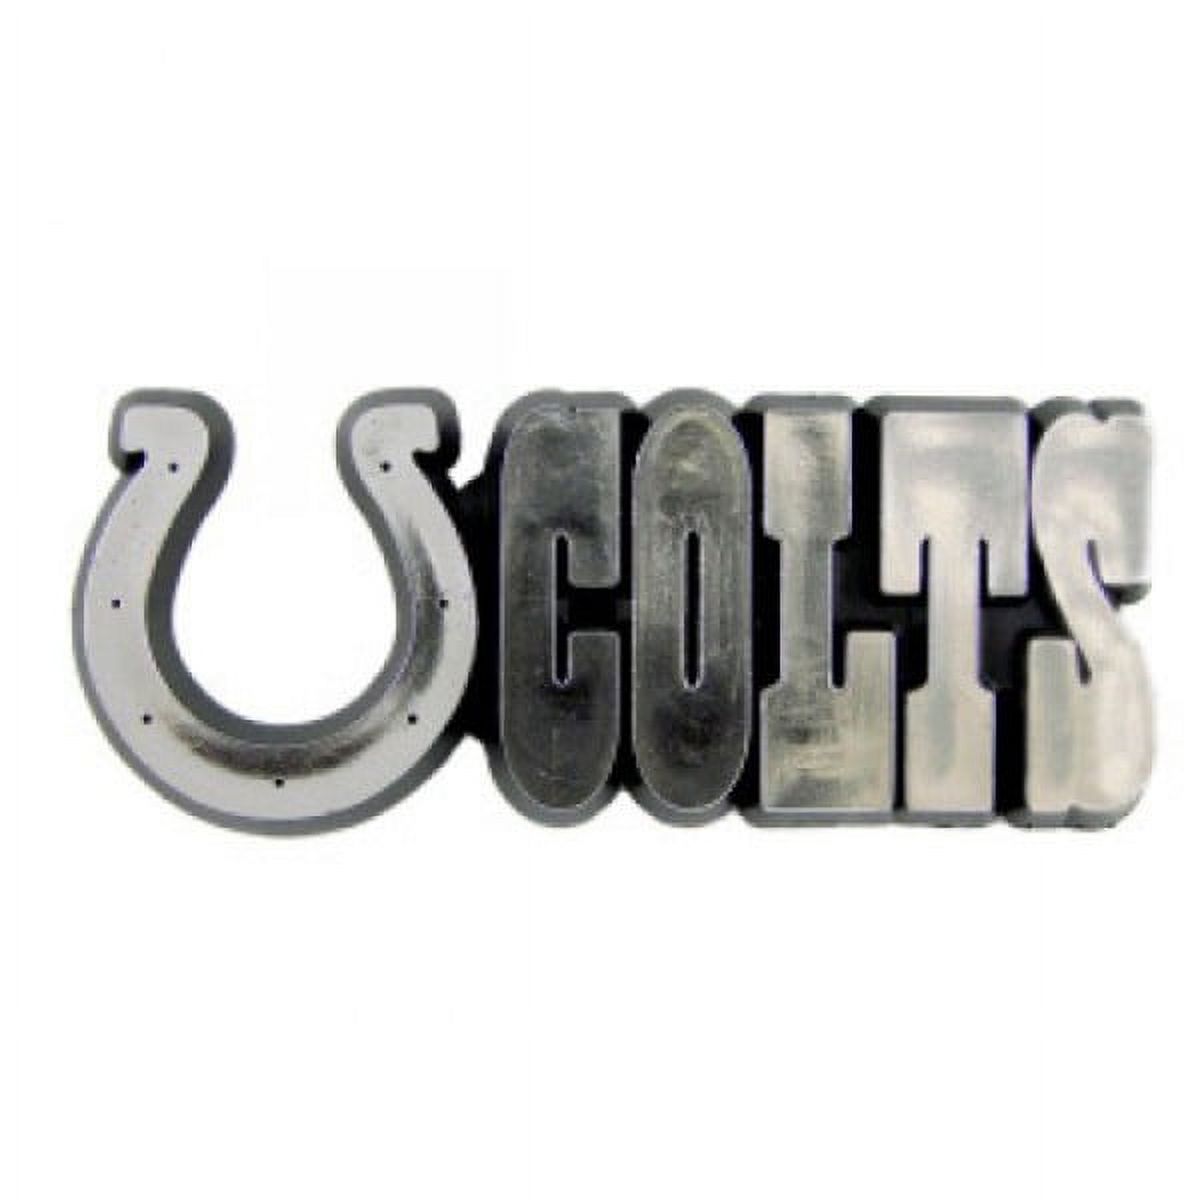 Indianapolis Colts Auto Emblem - image 1 of 2